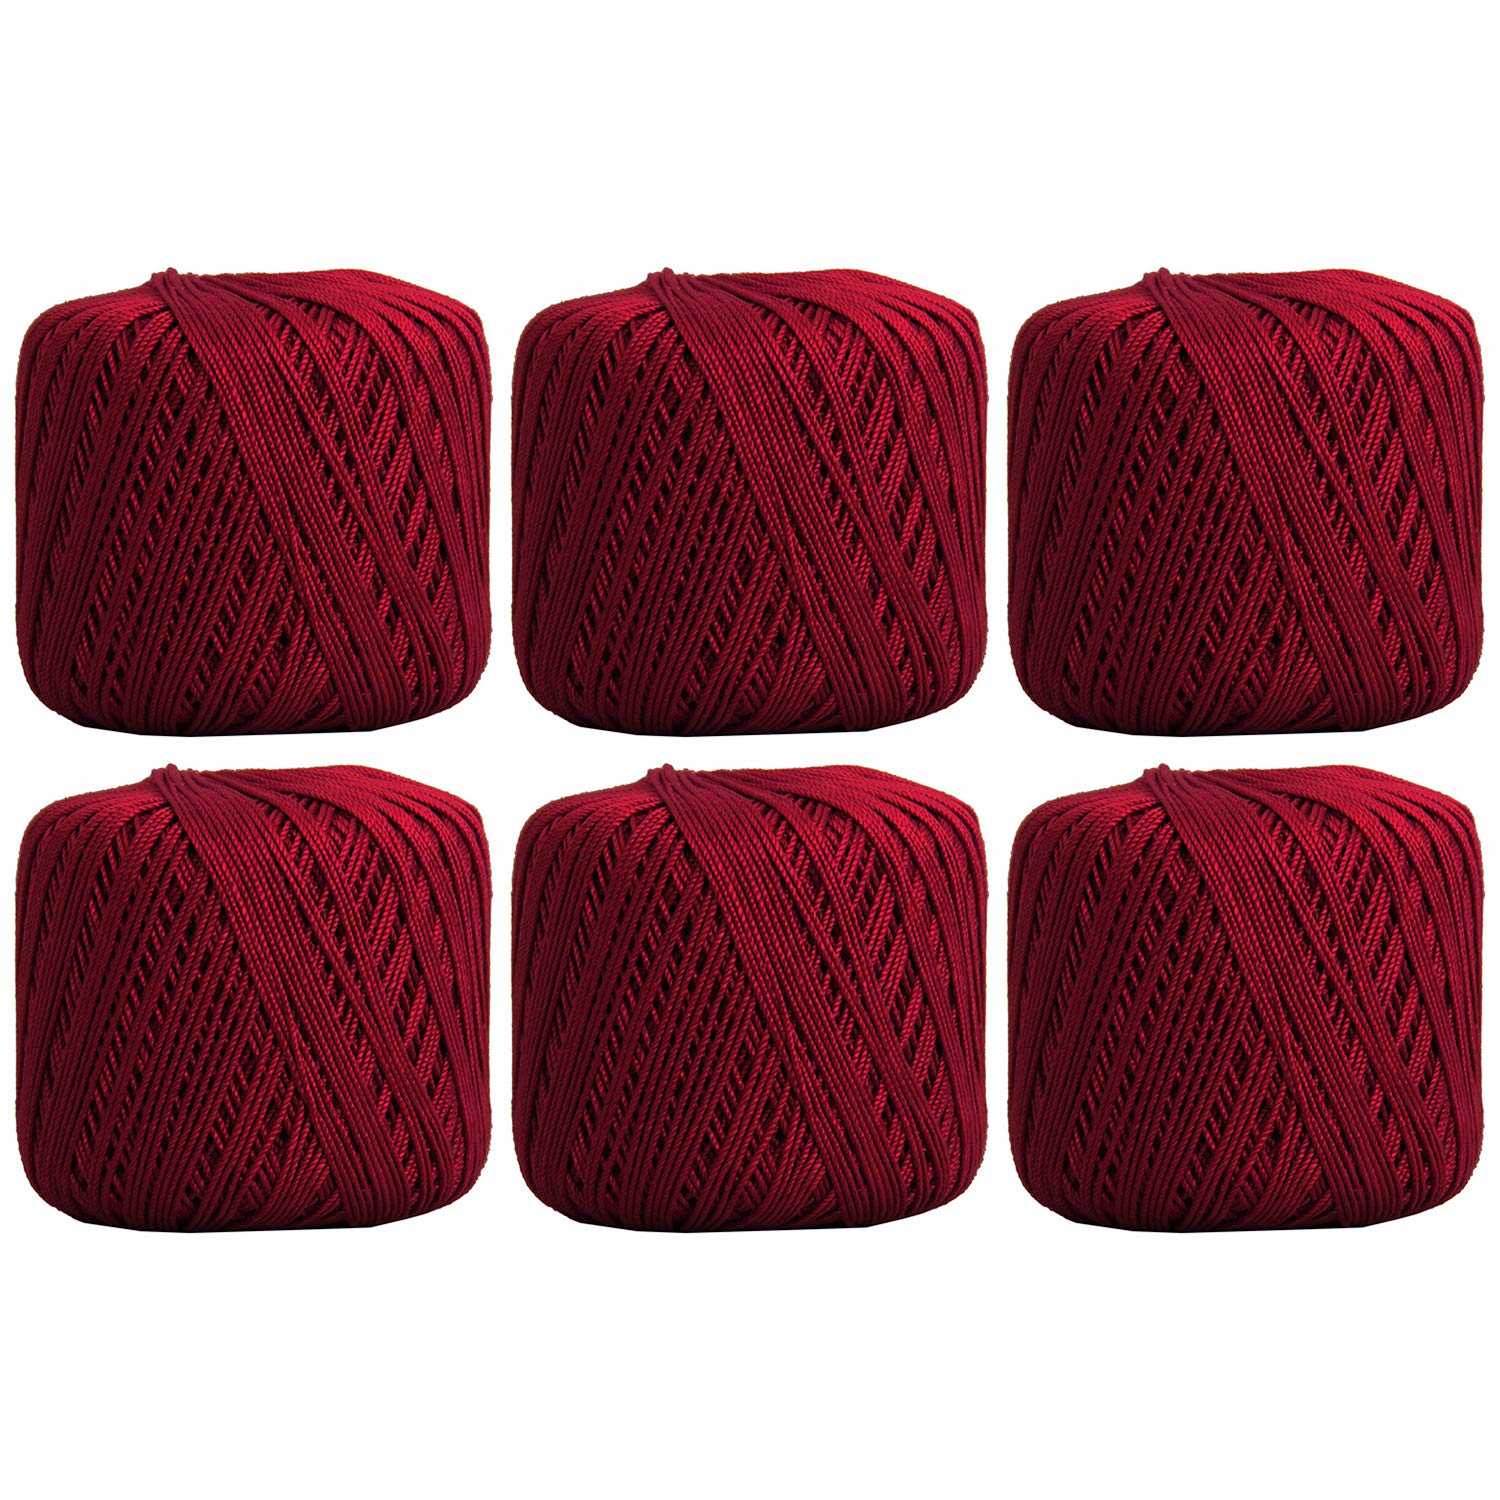 Threadart 6 Ball Pack Threadart 100 Pure Cotton Crochet Thread - Size 3 - Color 37 - Burgundy - Size 10 And 3 - Singles And Bulk Packs Ava